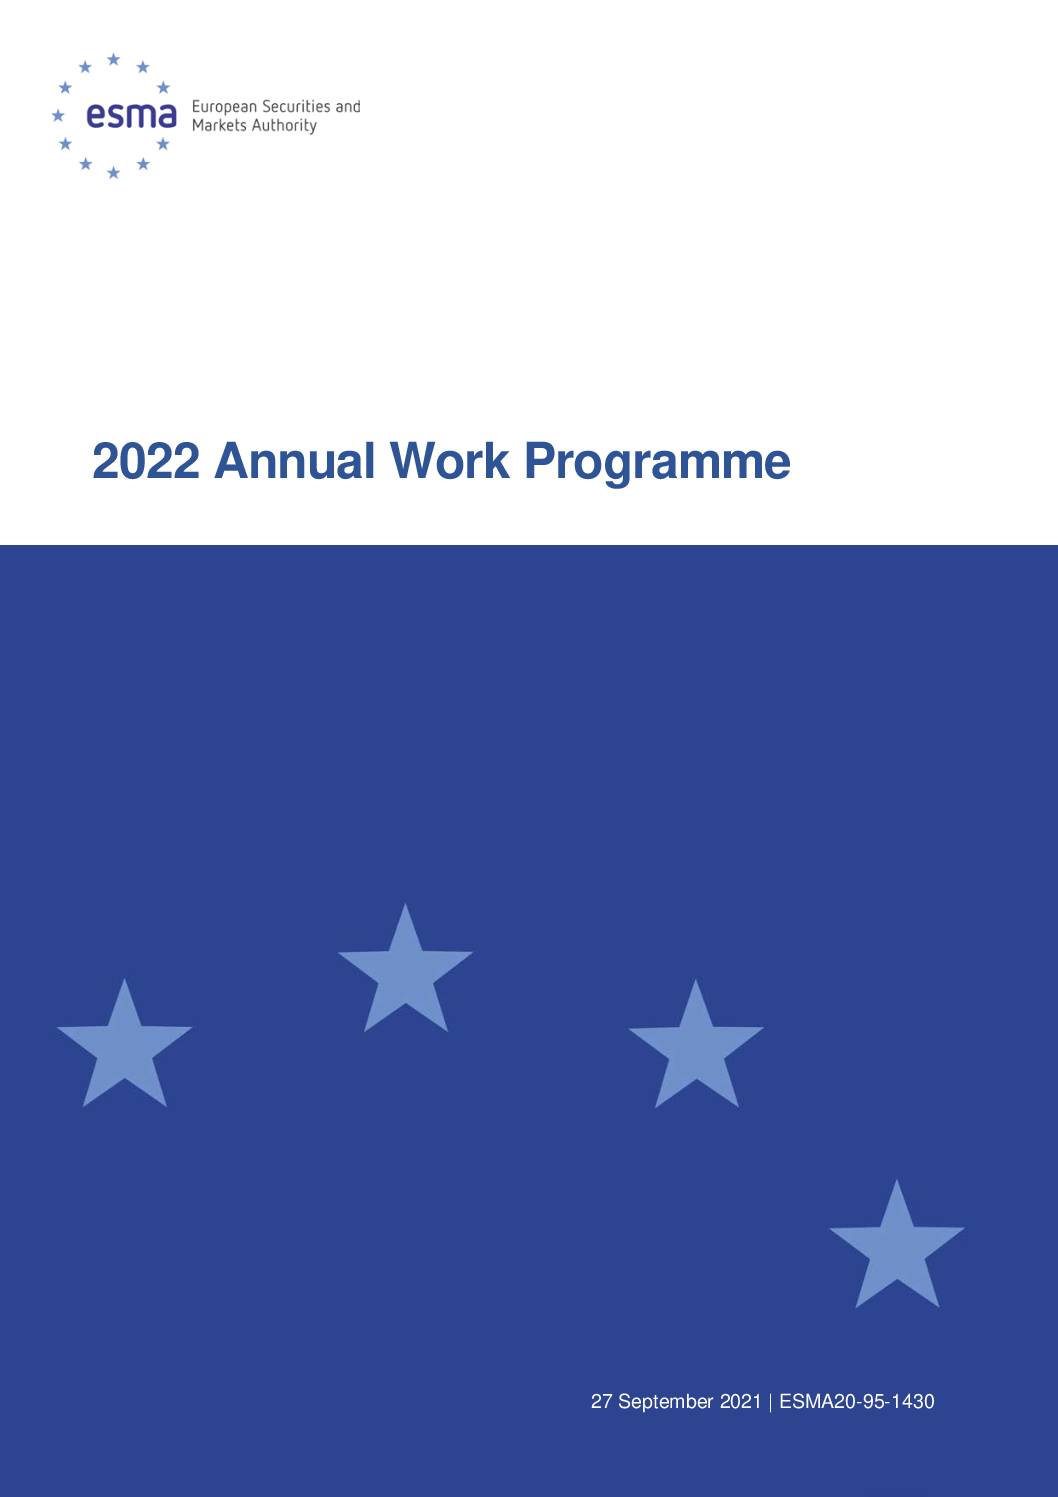 European Securities Markets Authority: 2022 Annual Work Programme